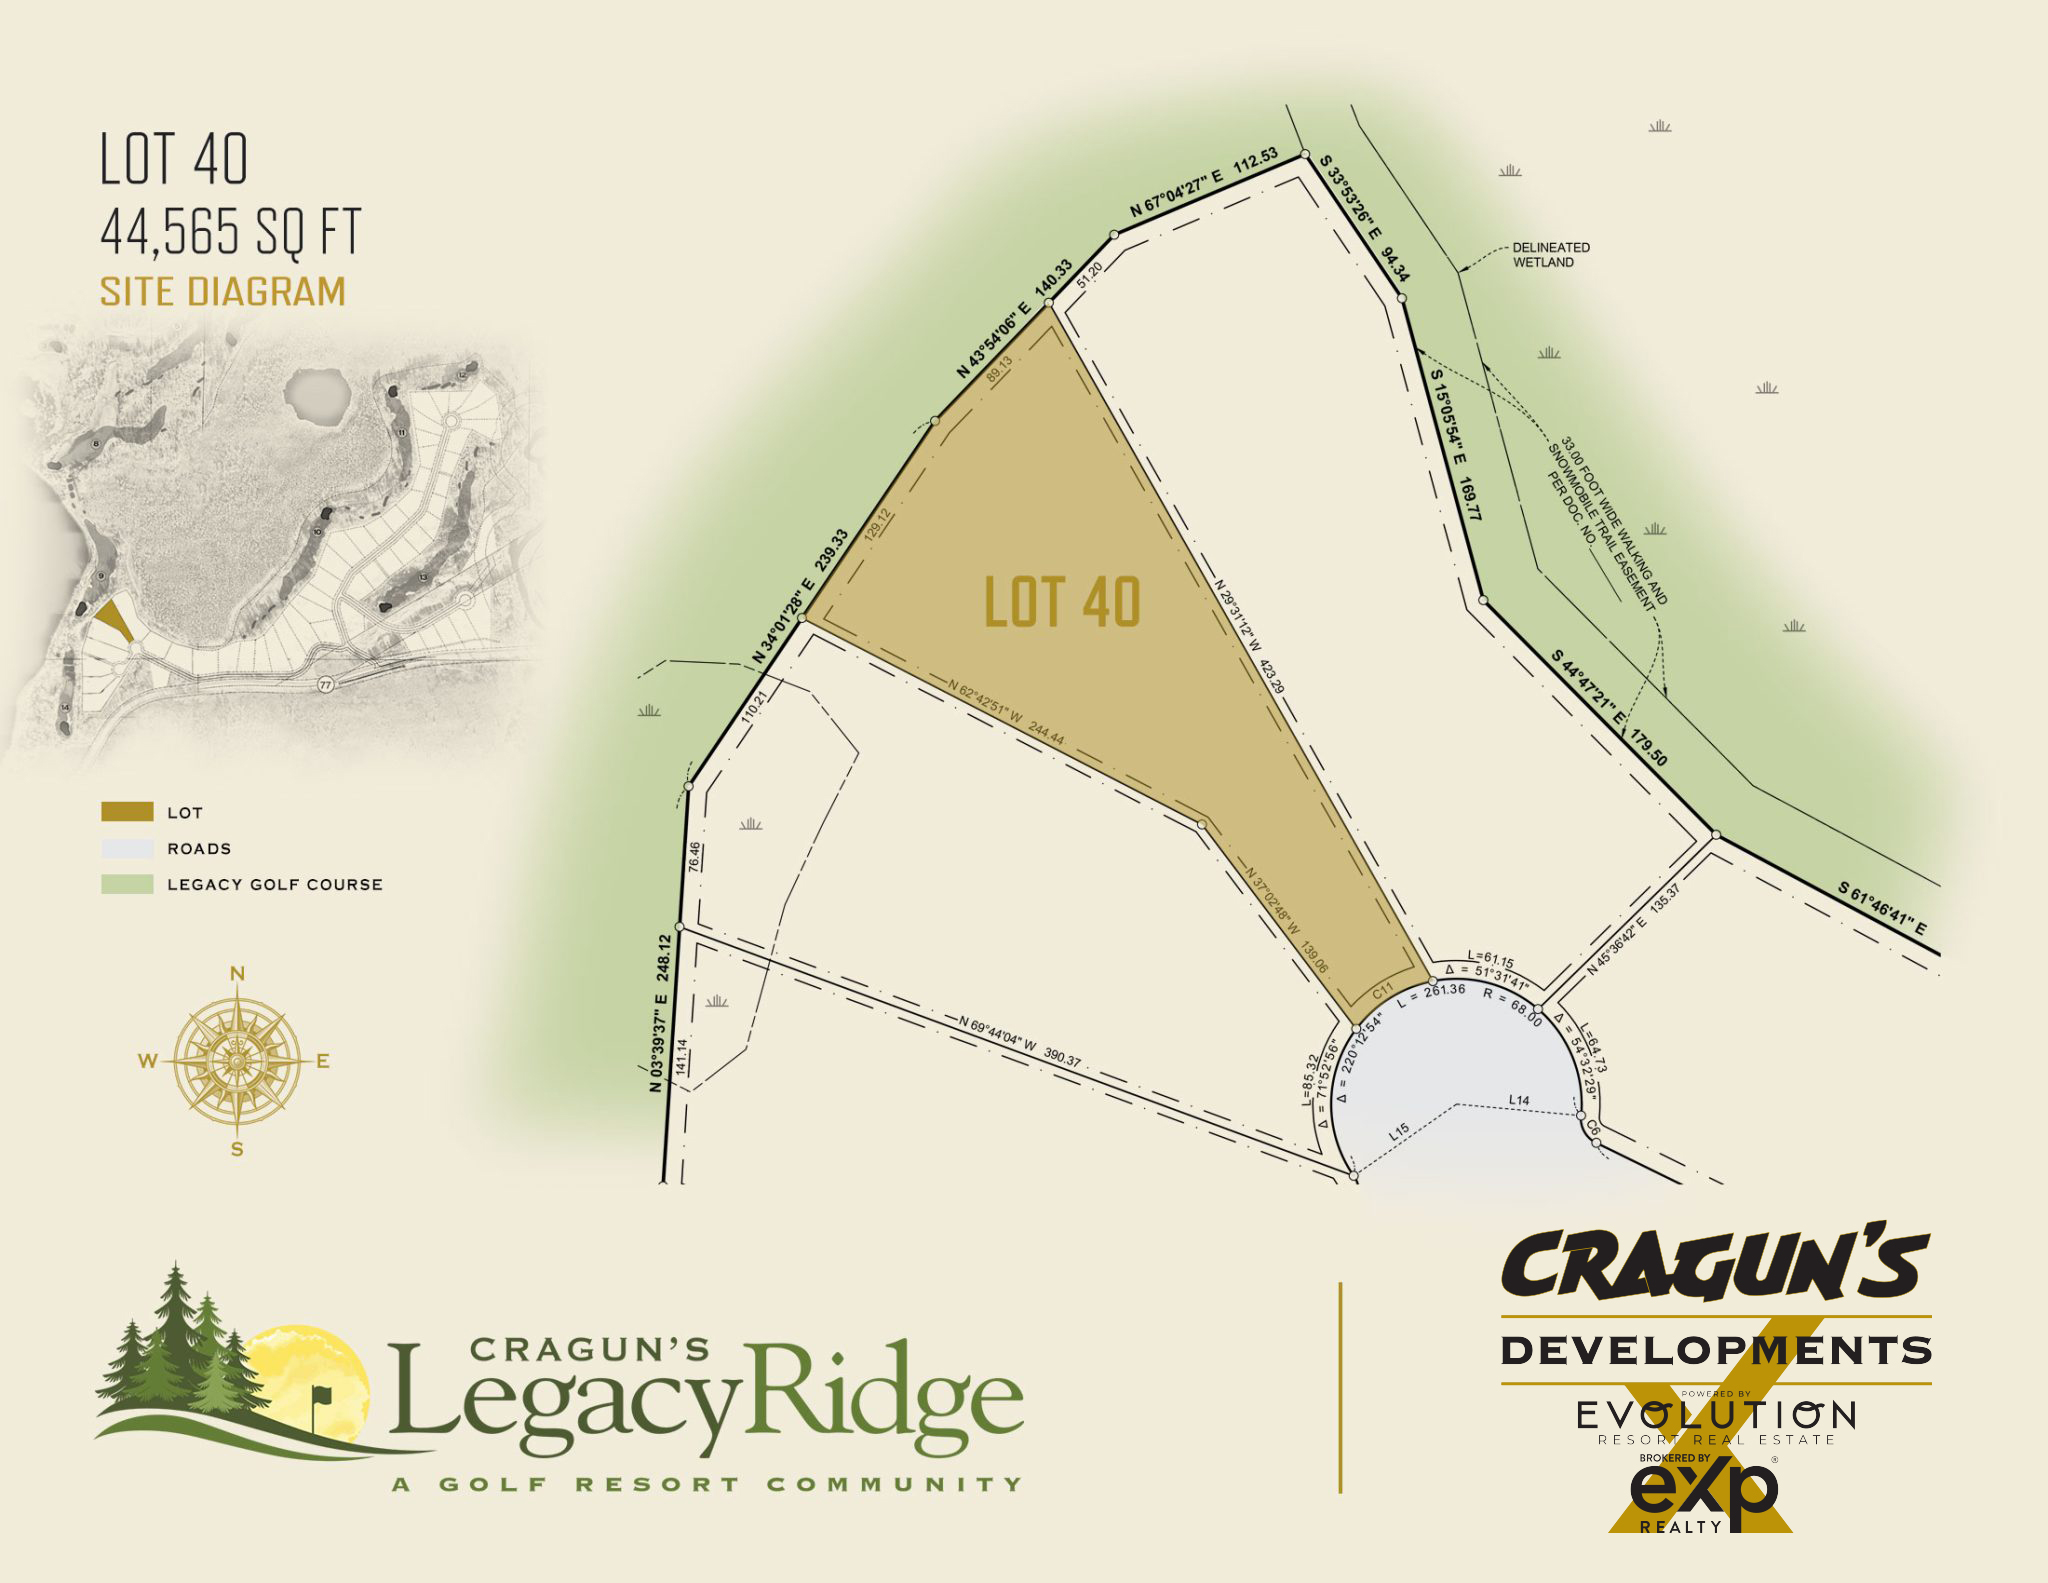 Legacy Ridge Lot 40 at Cragun's Developments in Brainerd, MN